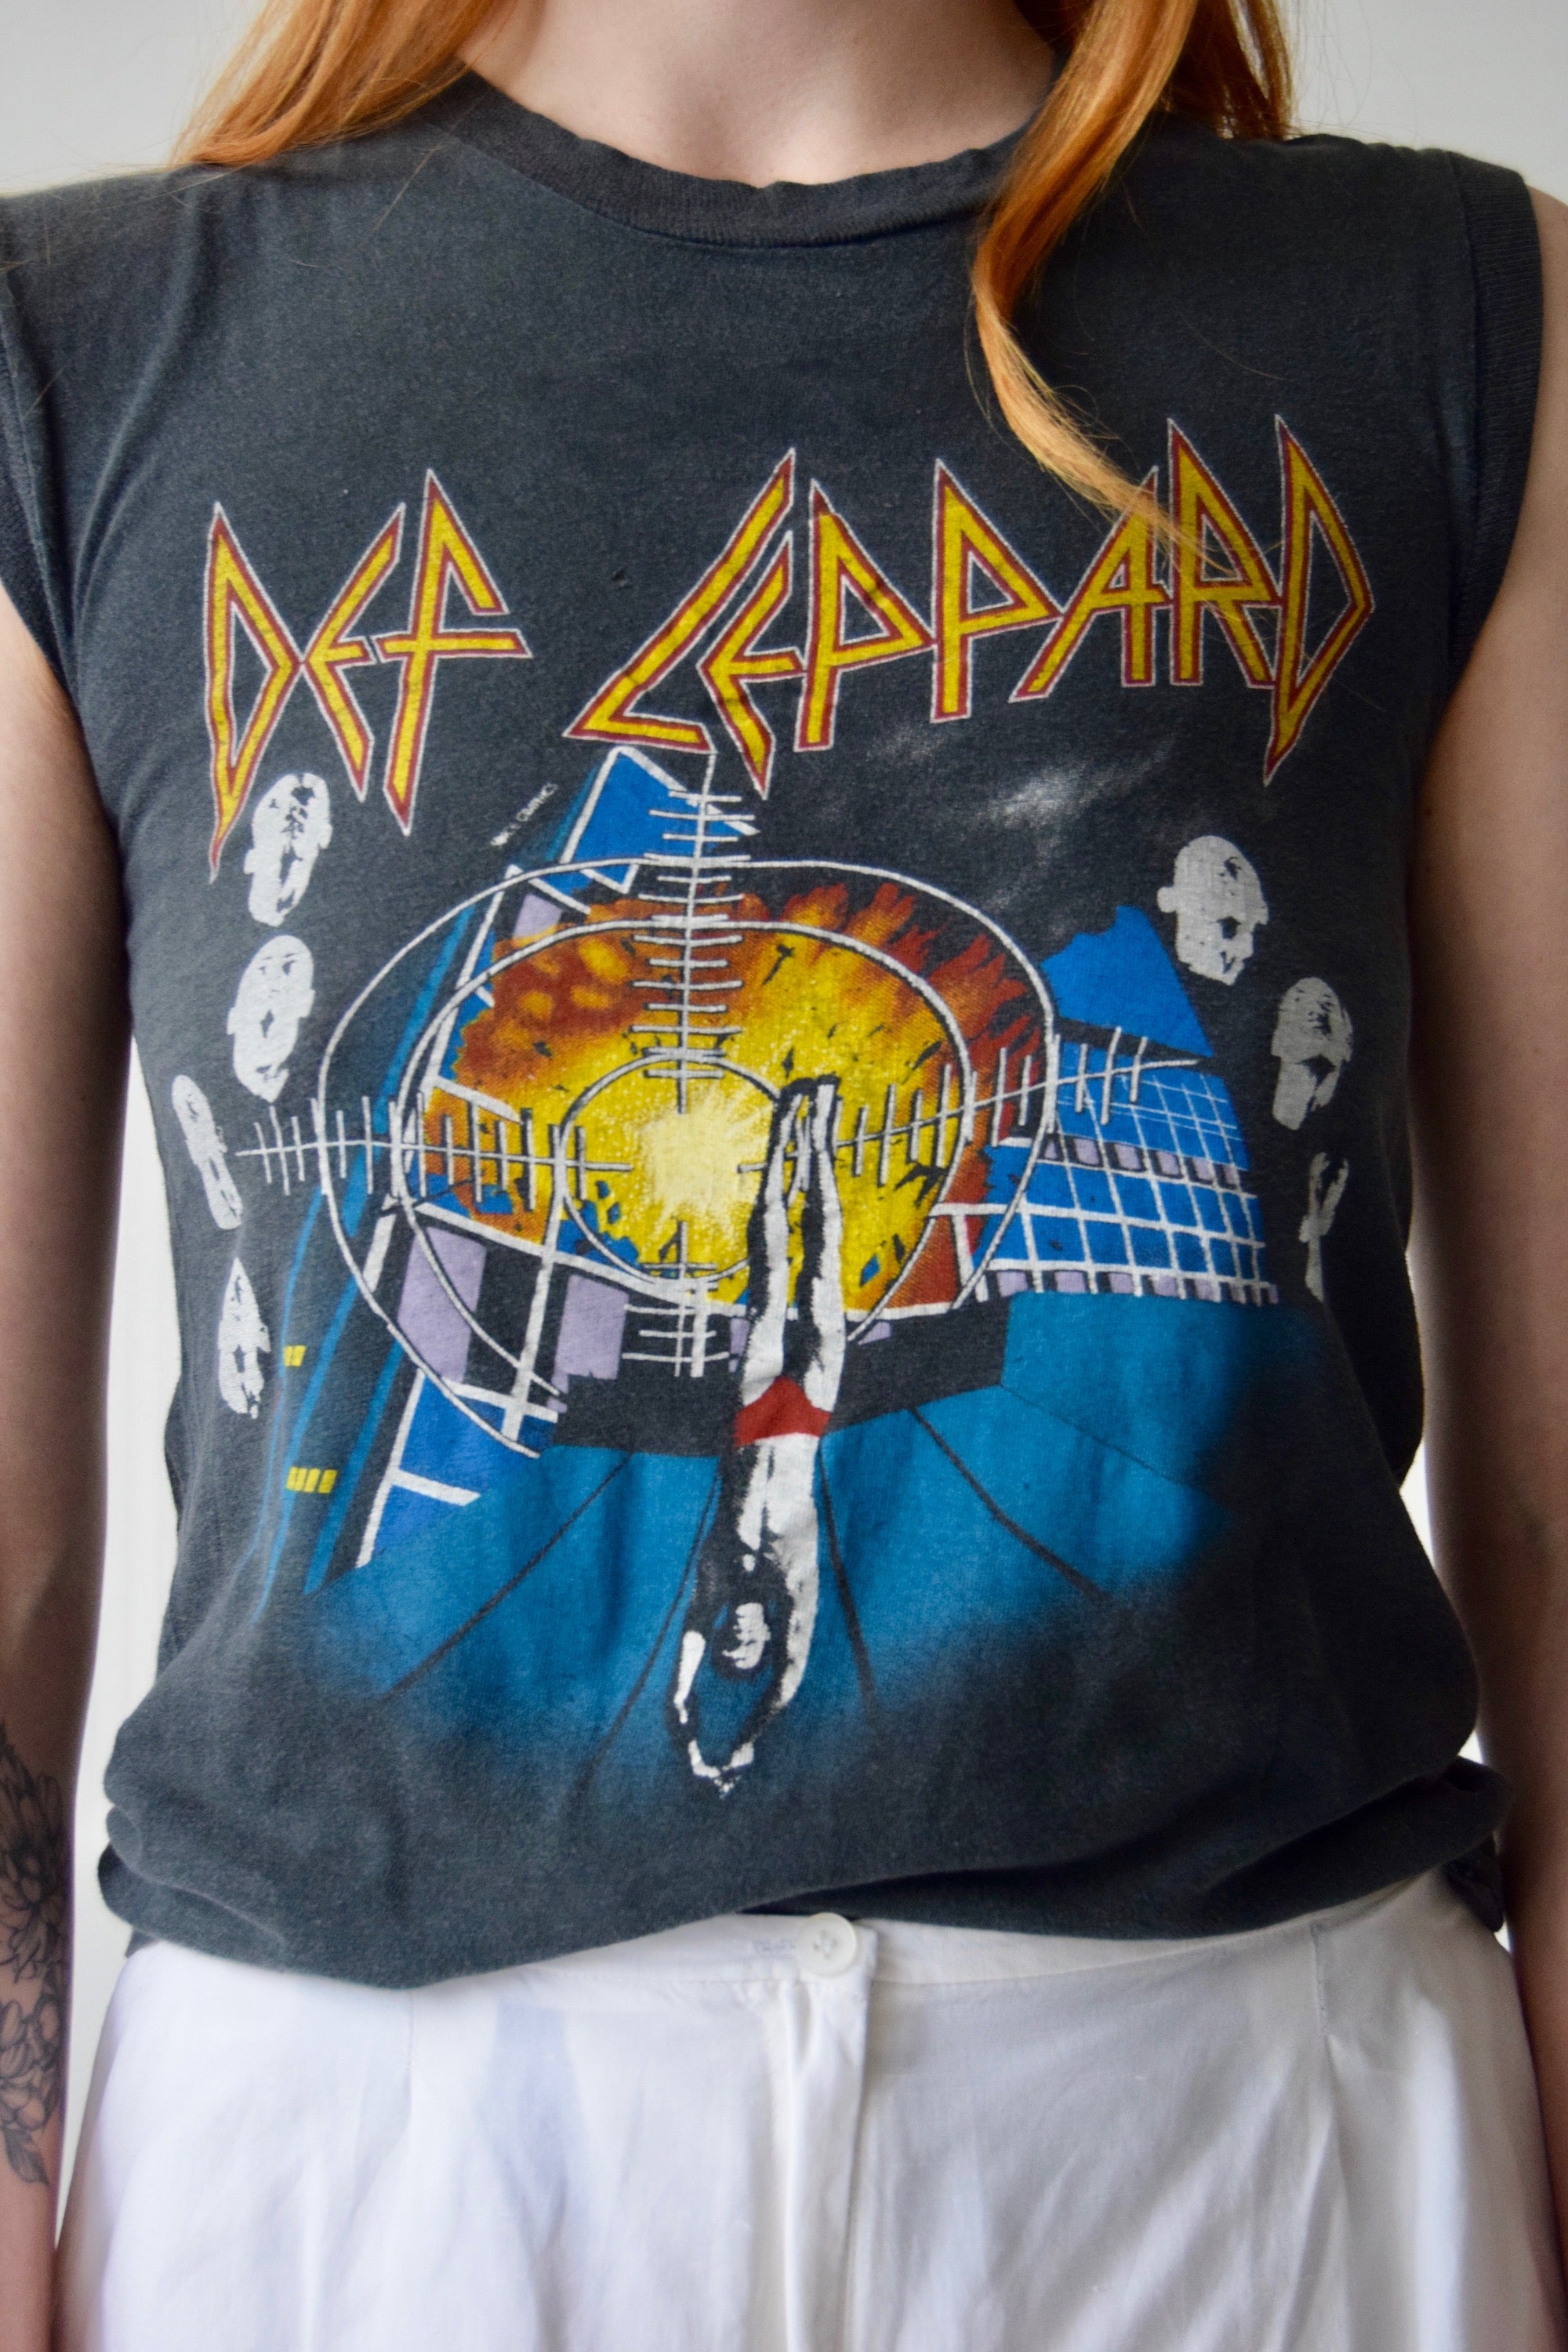 Vintage 1983 Def Leppard "Pyromania" Rock Brigade Concert Tour Shirt